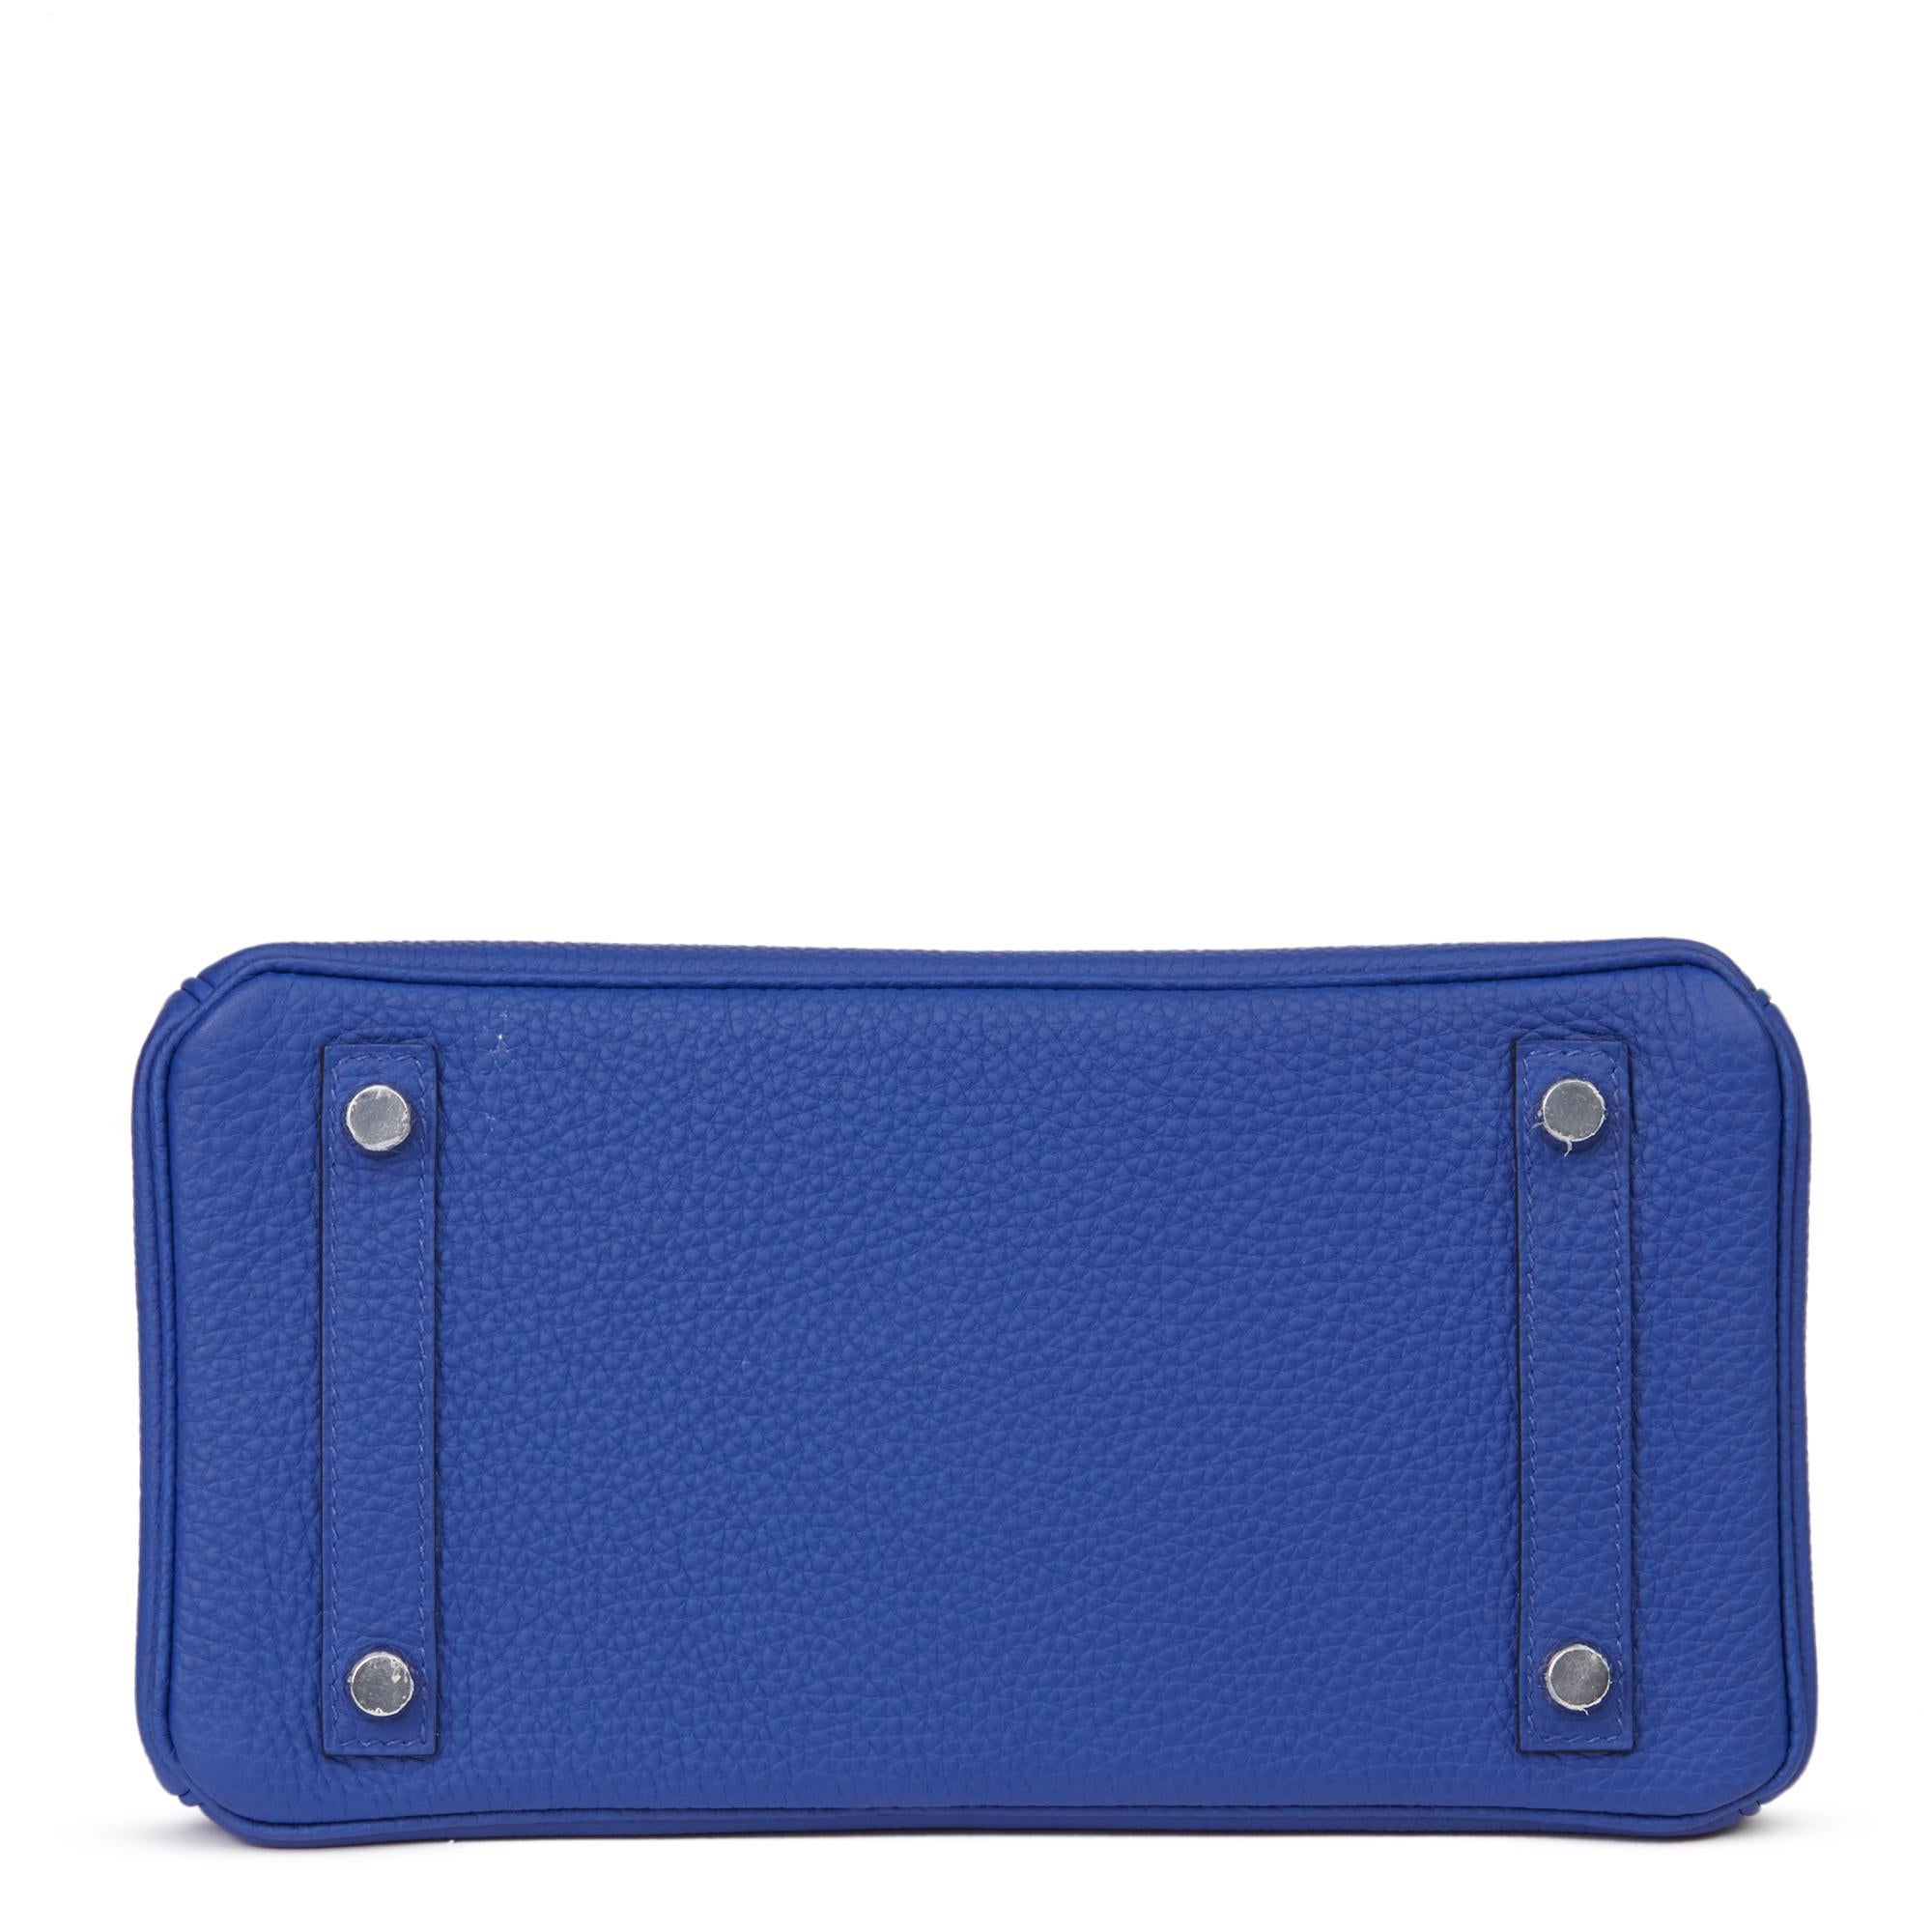 2016 Hermès Blue Electric Togo Leather Birkin 25cm 2